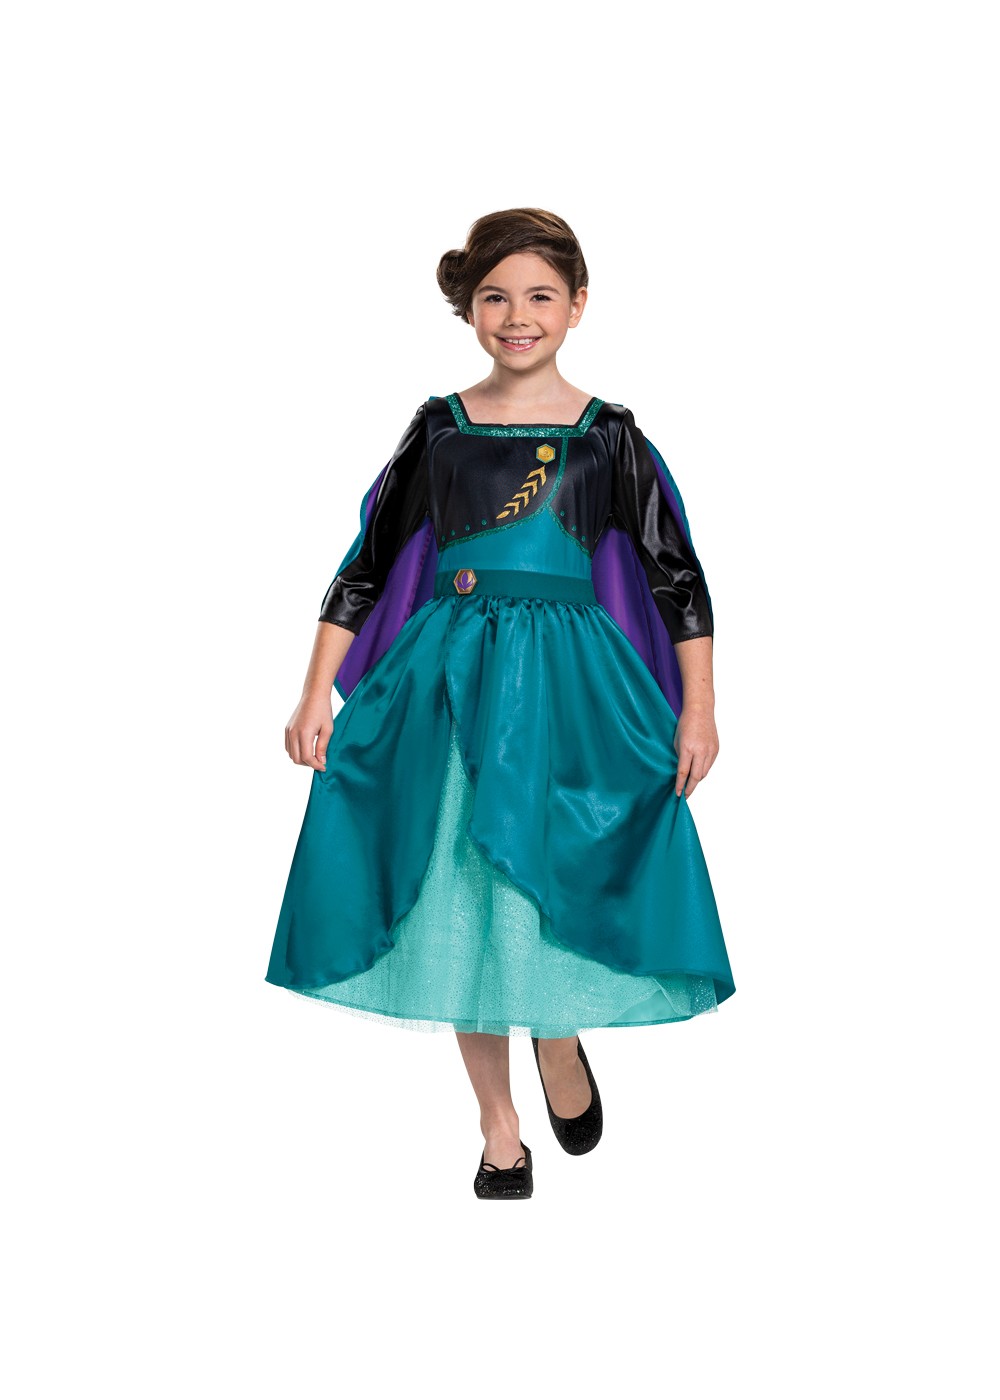 Queen Anna Frozen Toddler Costume